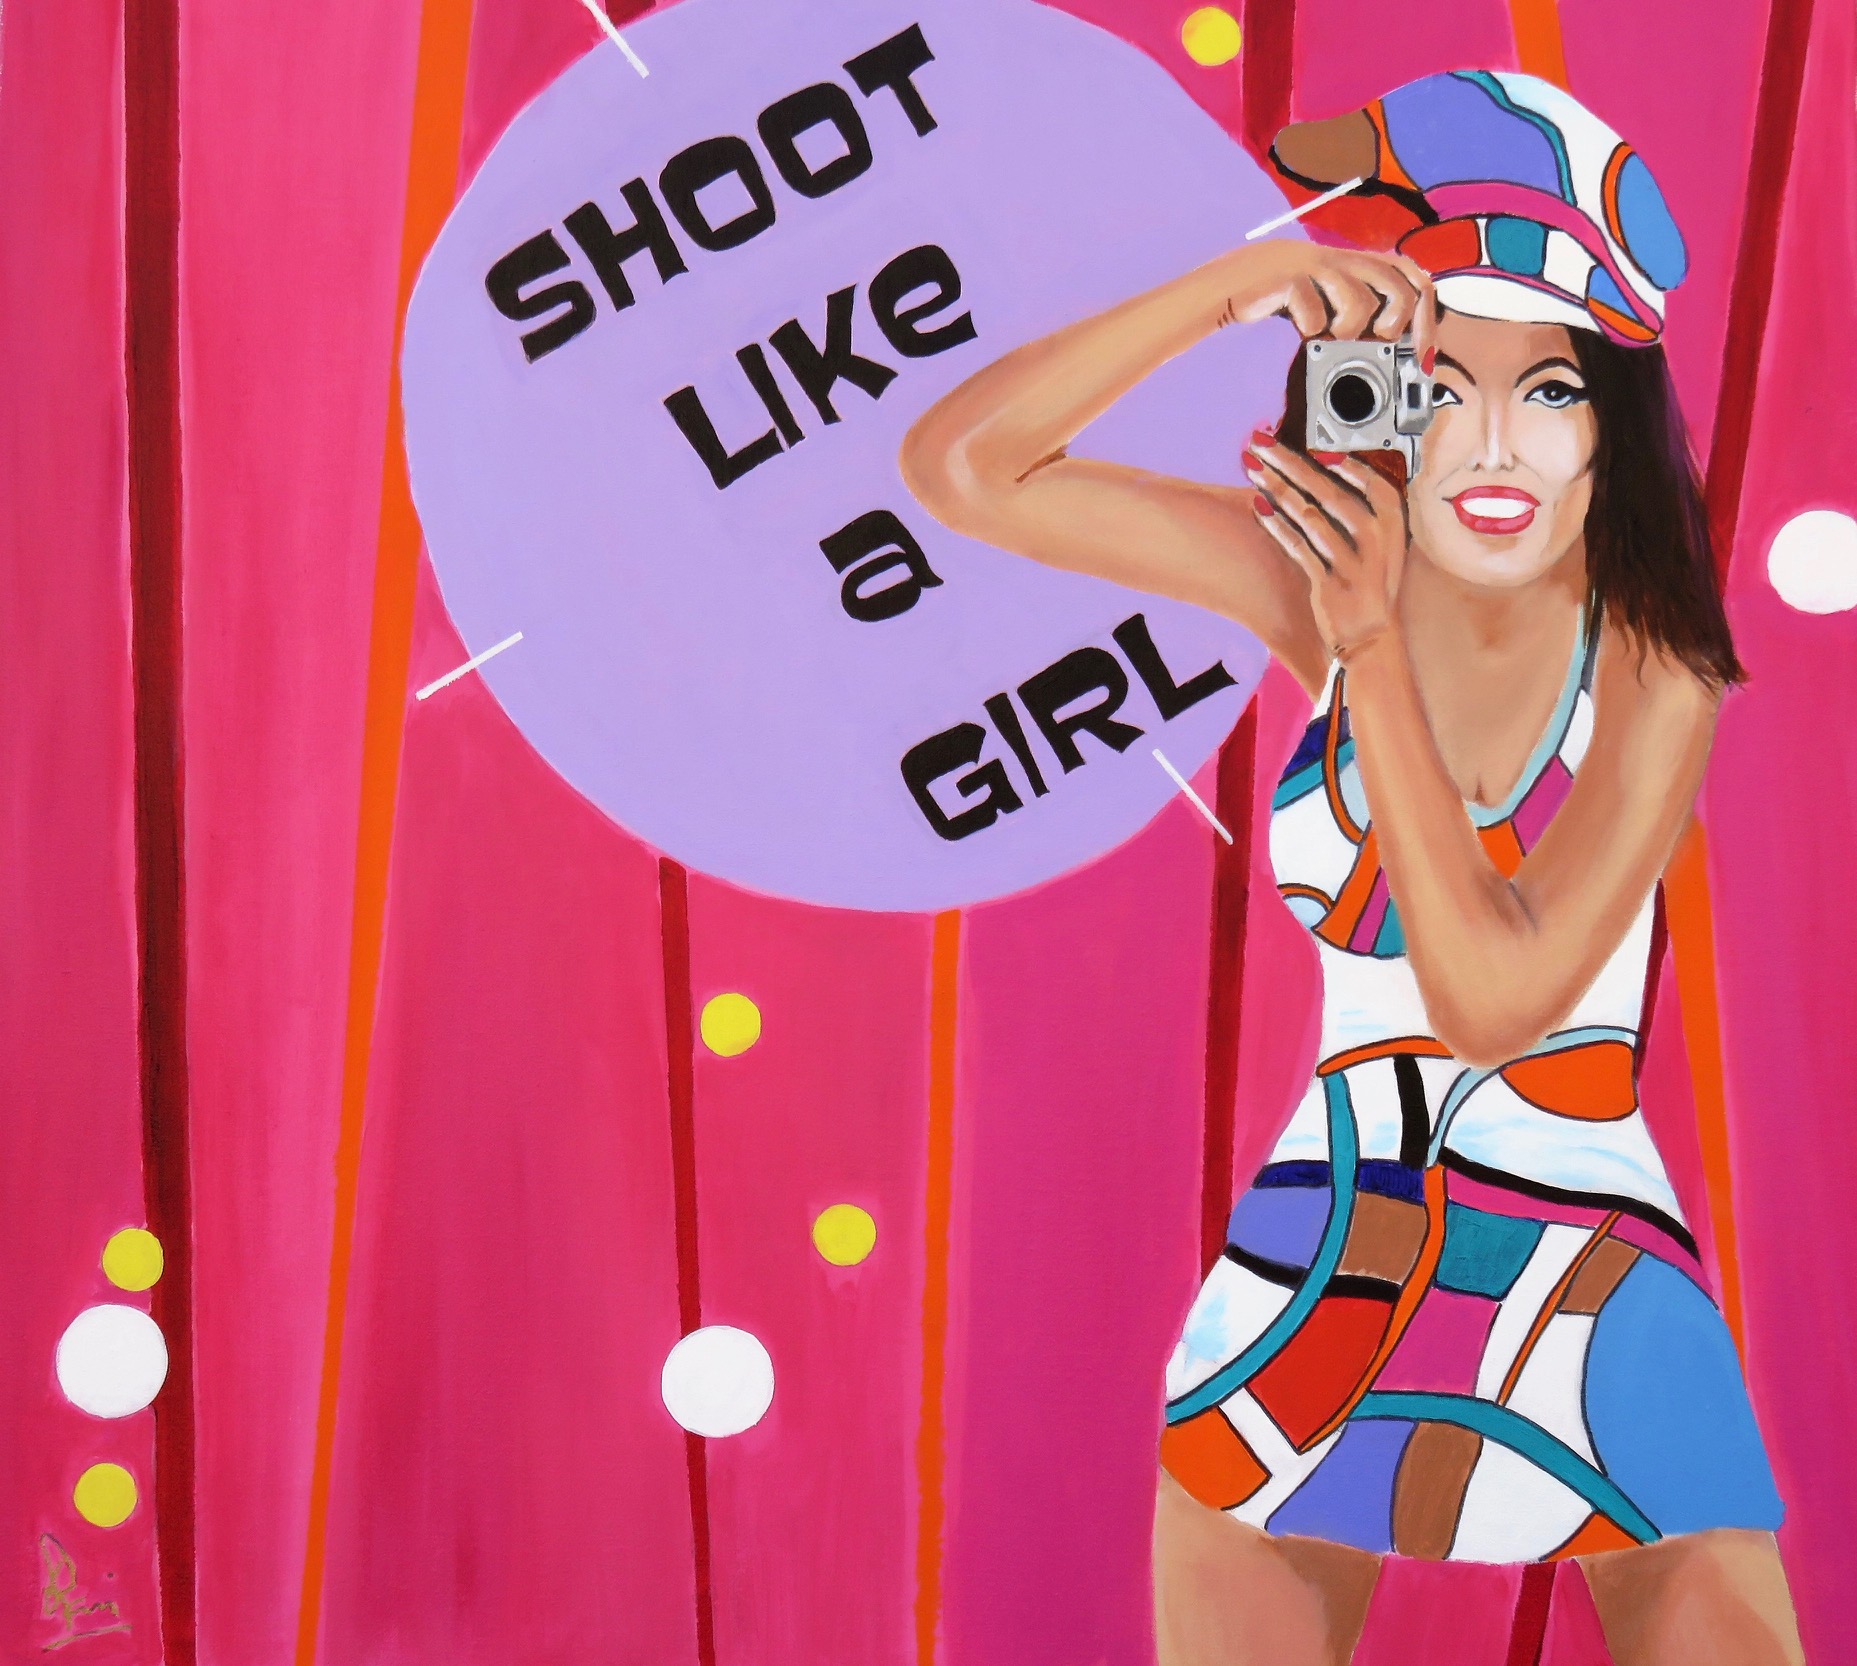 Shoot Like A Girl